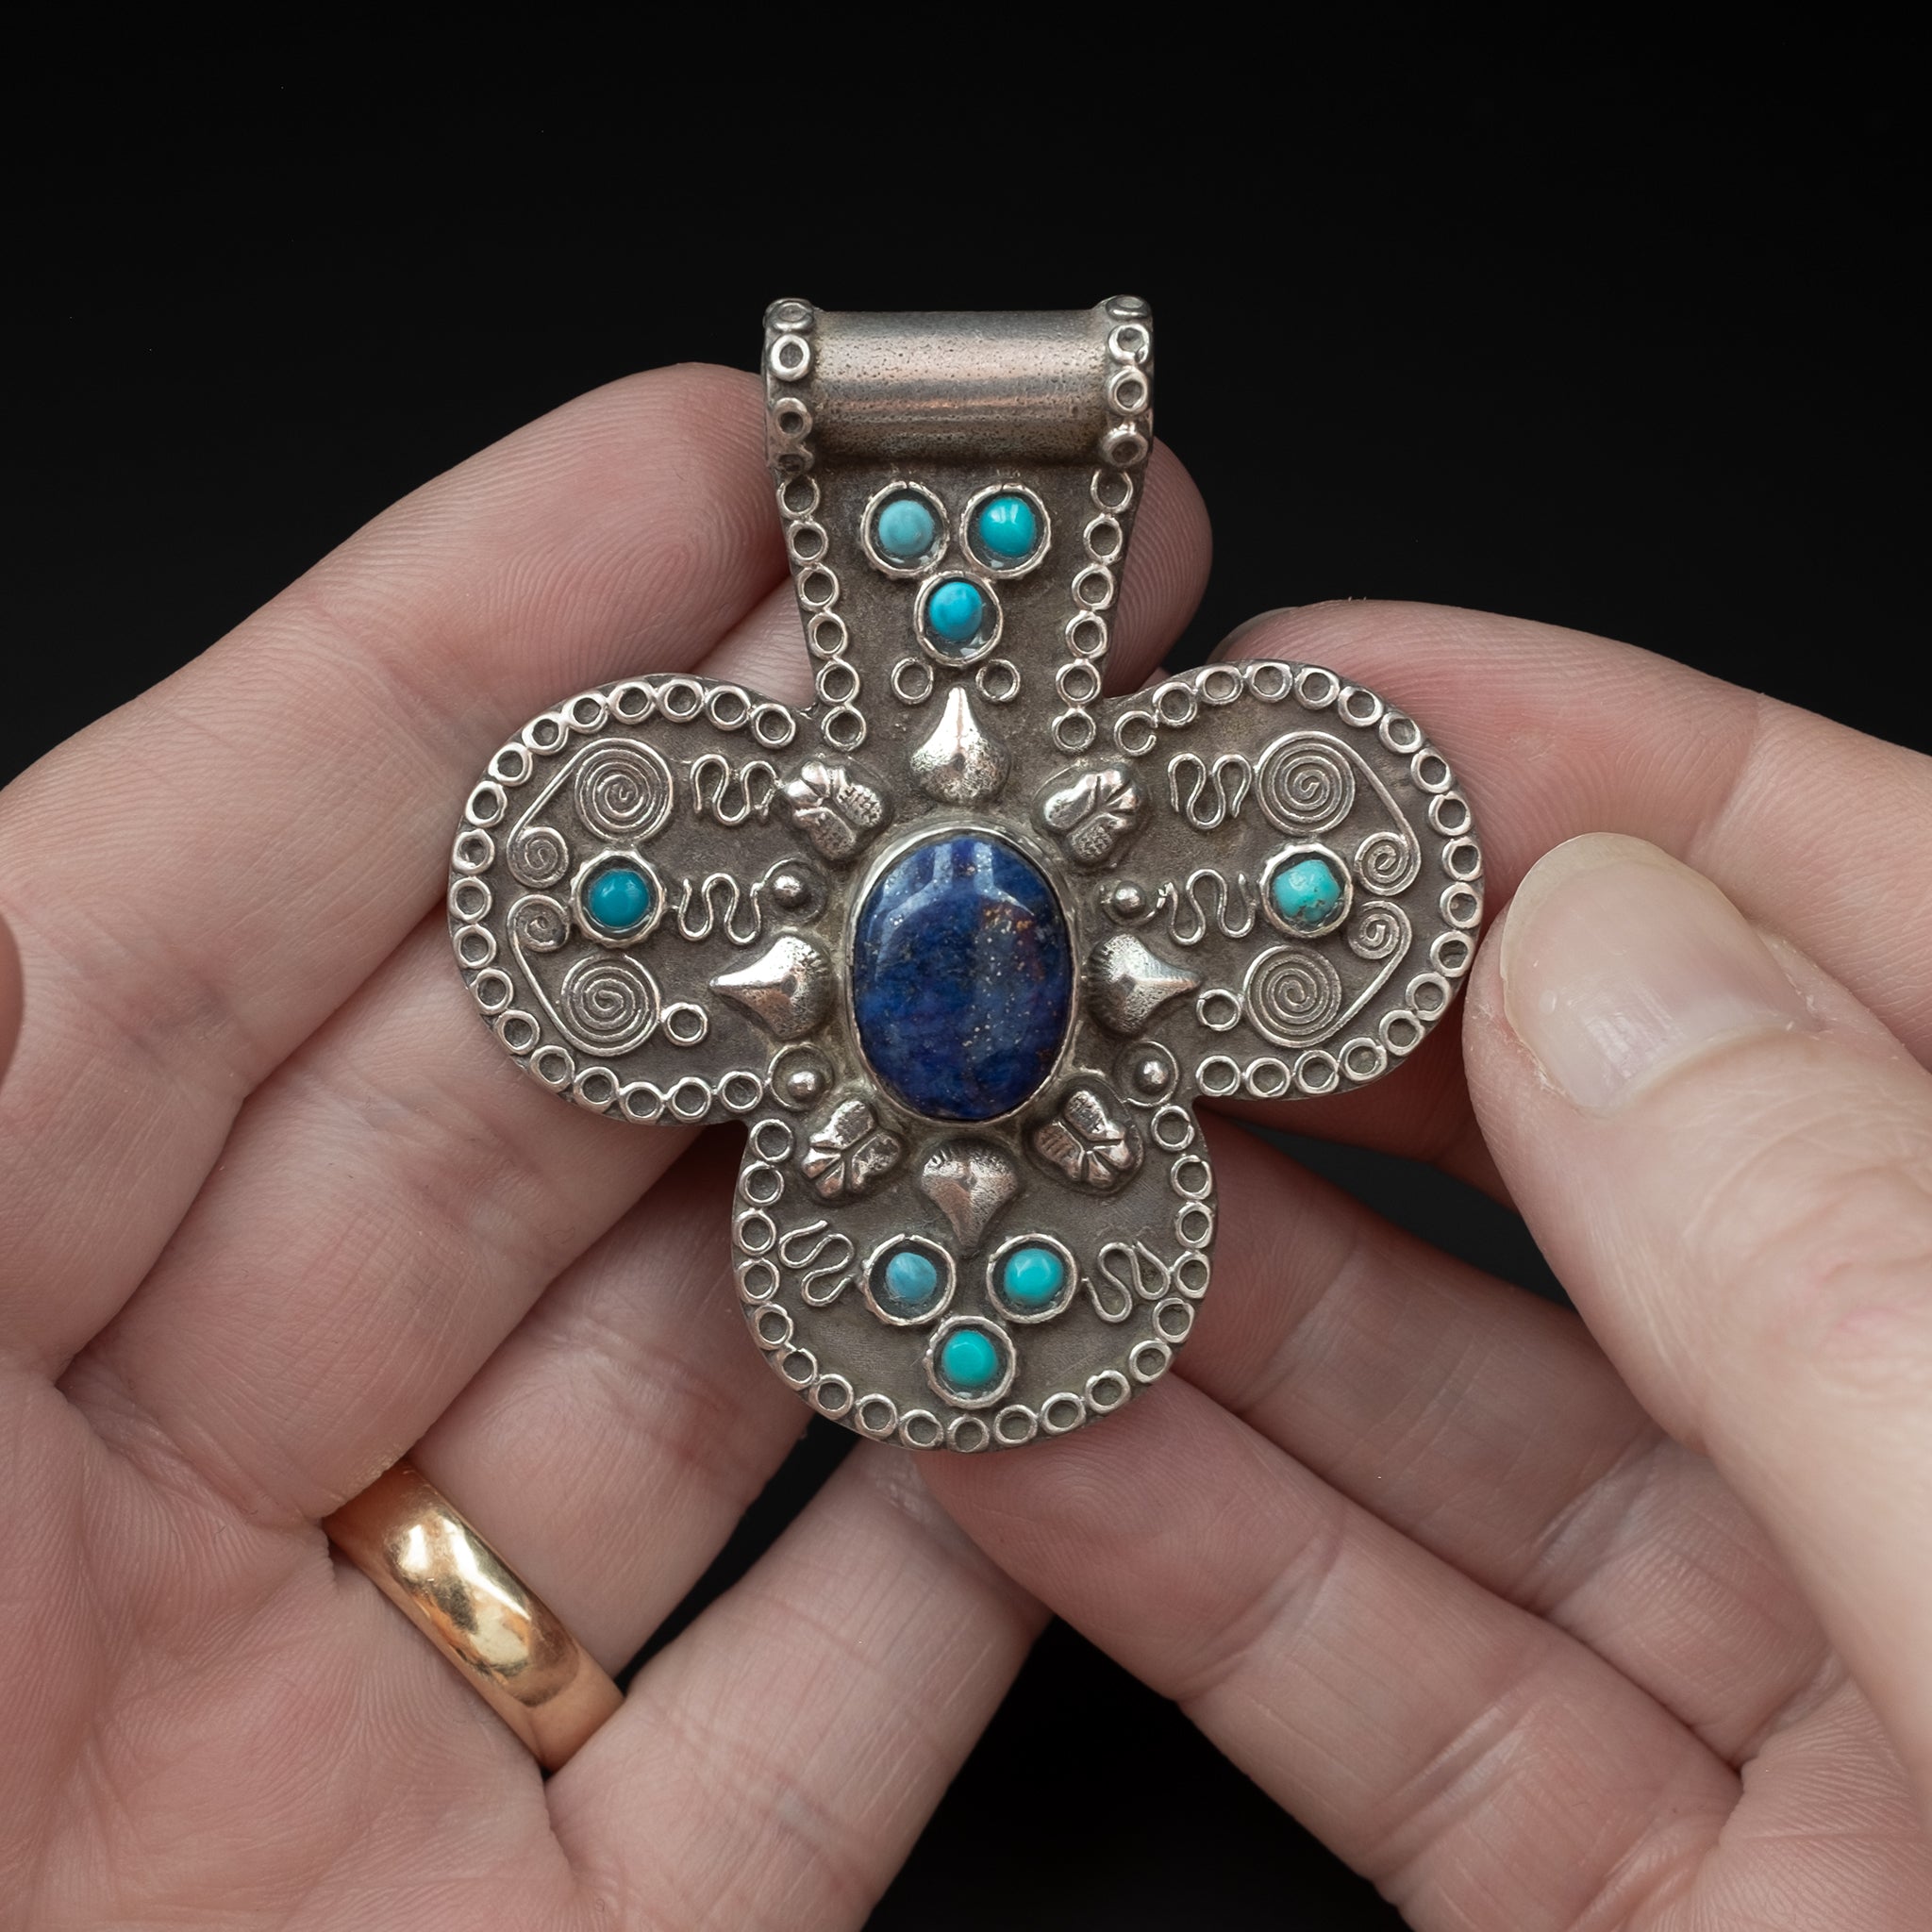 Silver, Turquoise & Lapis Lazuli ‘Foulet’ Khamsa, Kazakhstan